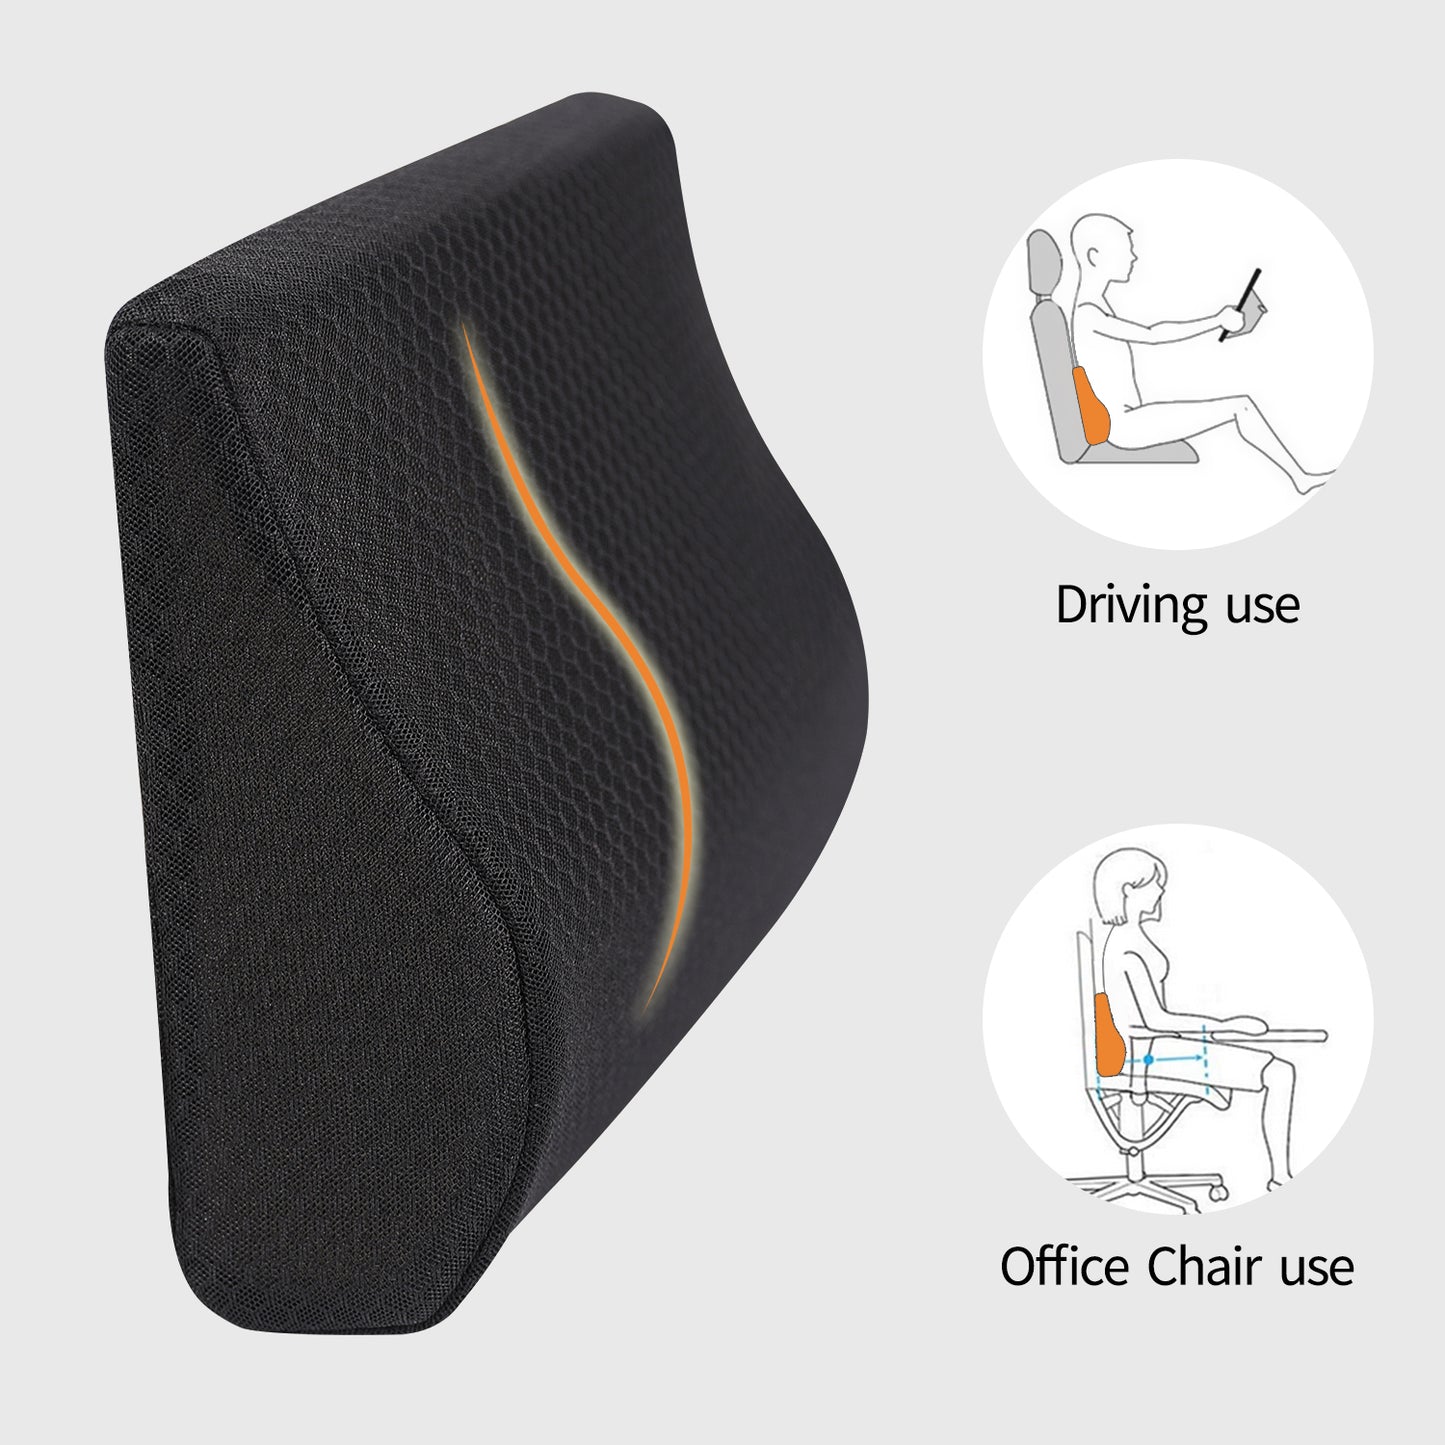 Lumbar Support Pillow, Lumbar Back Support Cushion for Office Chair Car Seat